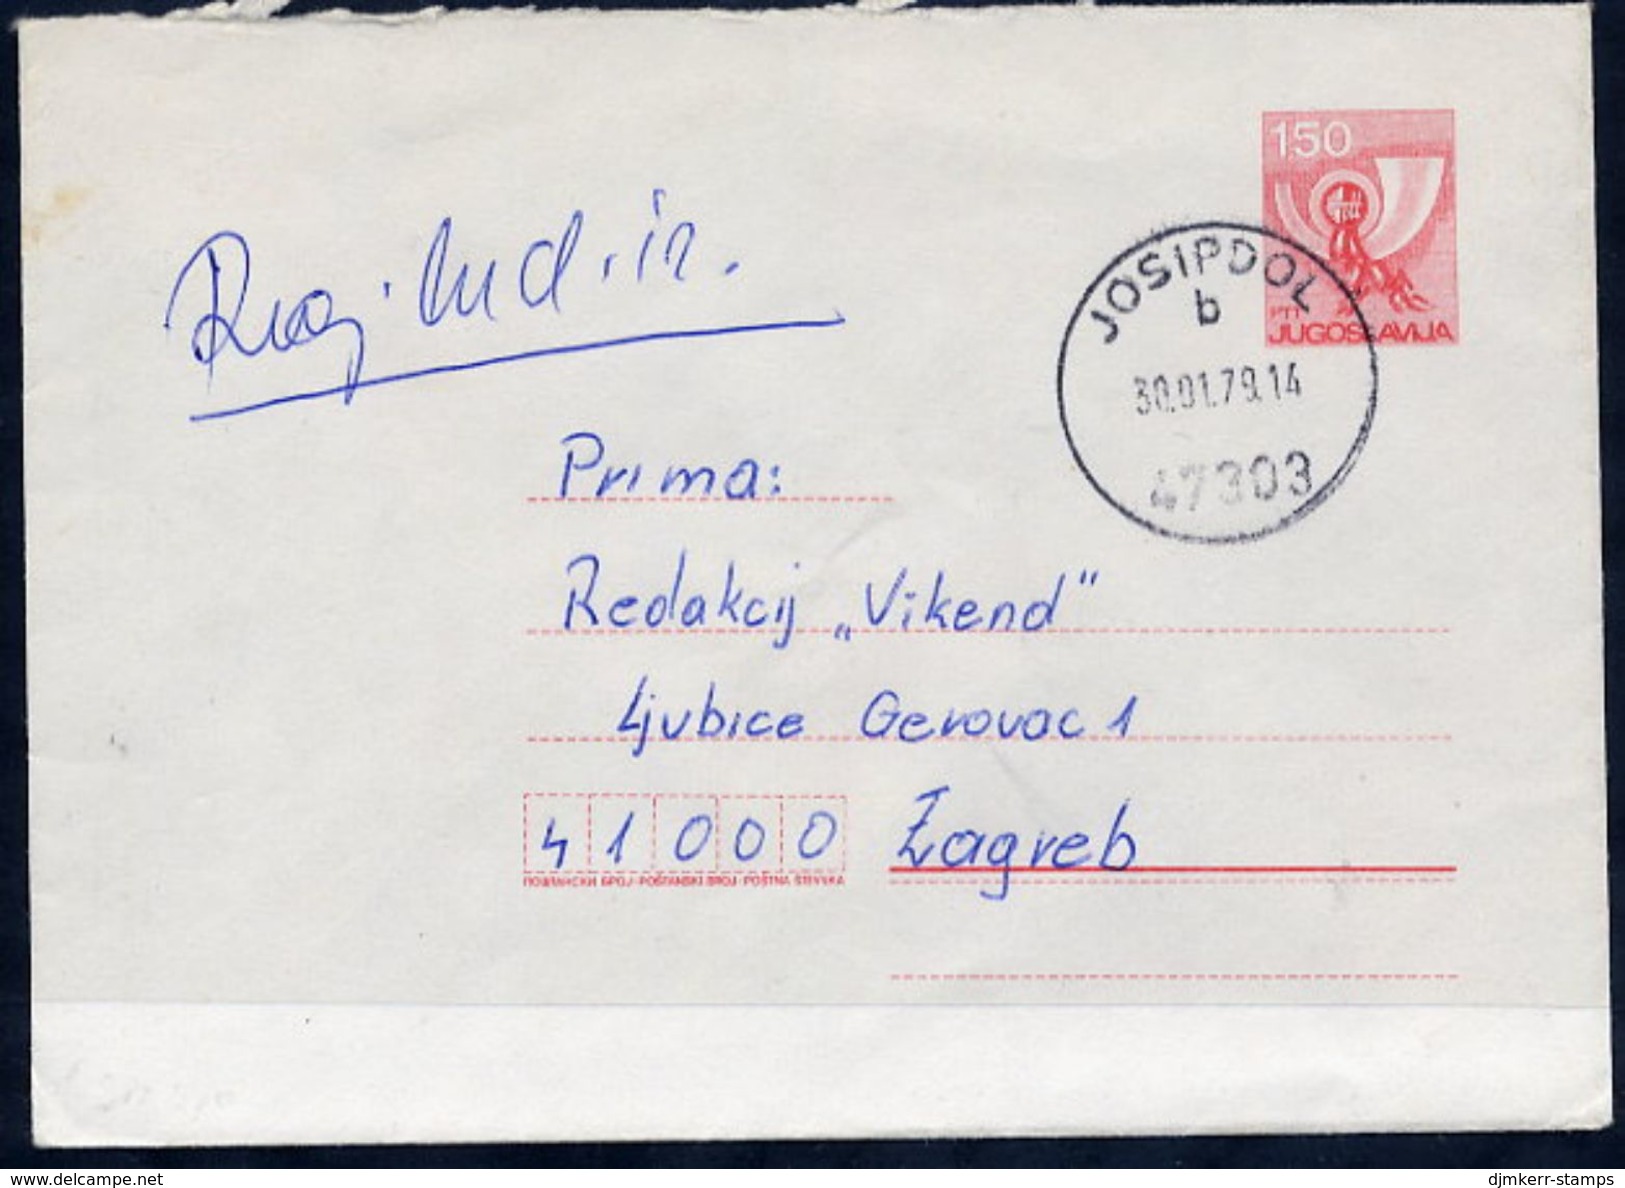 YUGOSLAVIA 1977 Posthorn 1.50 D.stationery Envelope Used Without Additional Franking.  Michel U70 - Ganzsachen